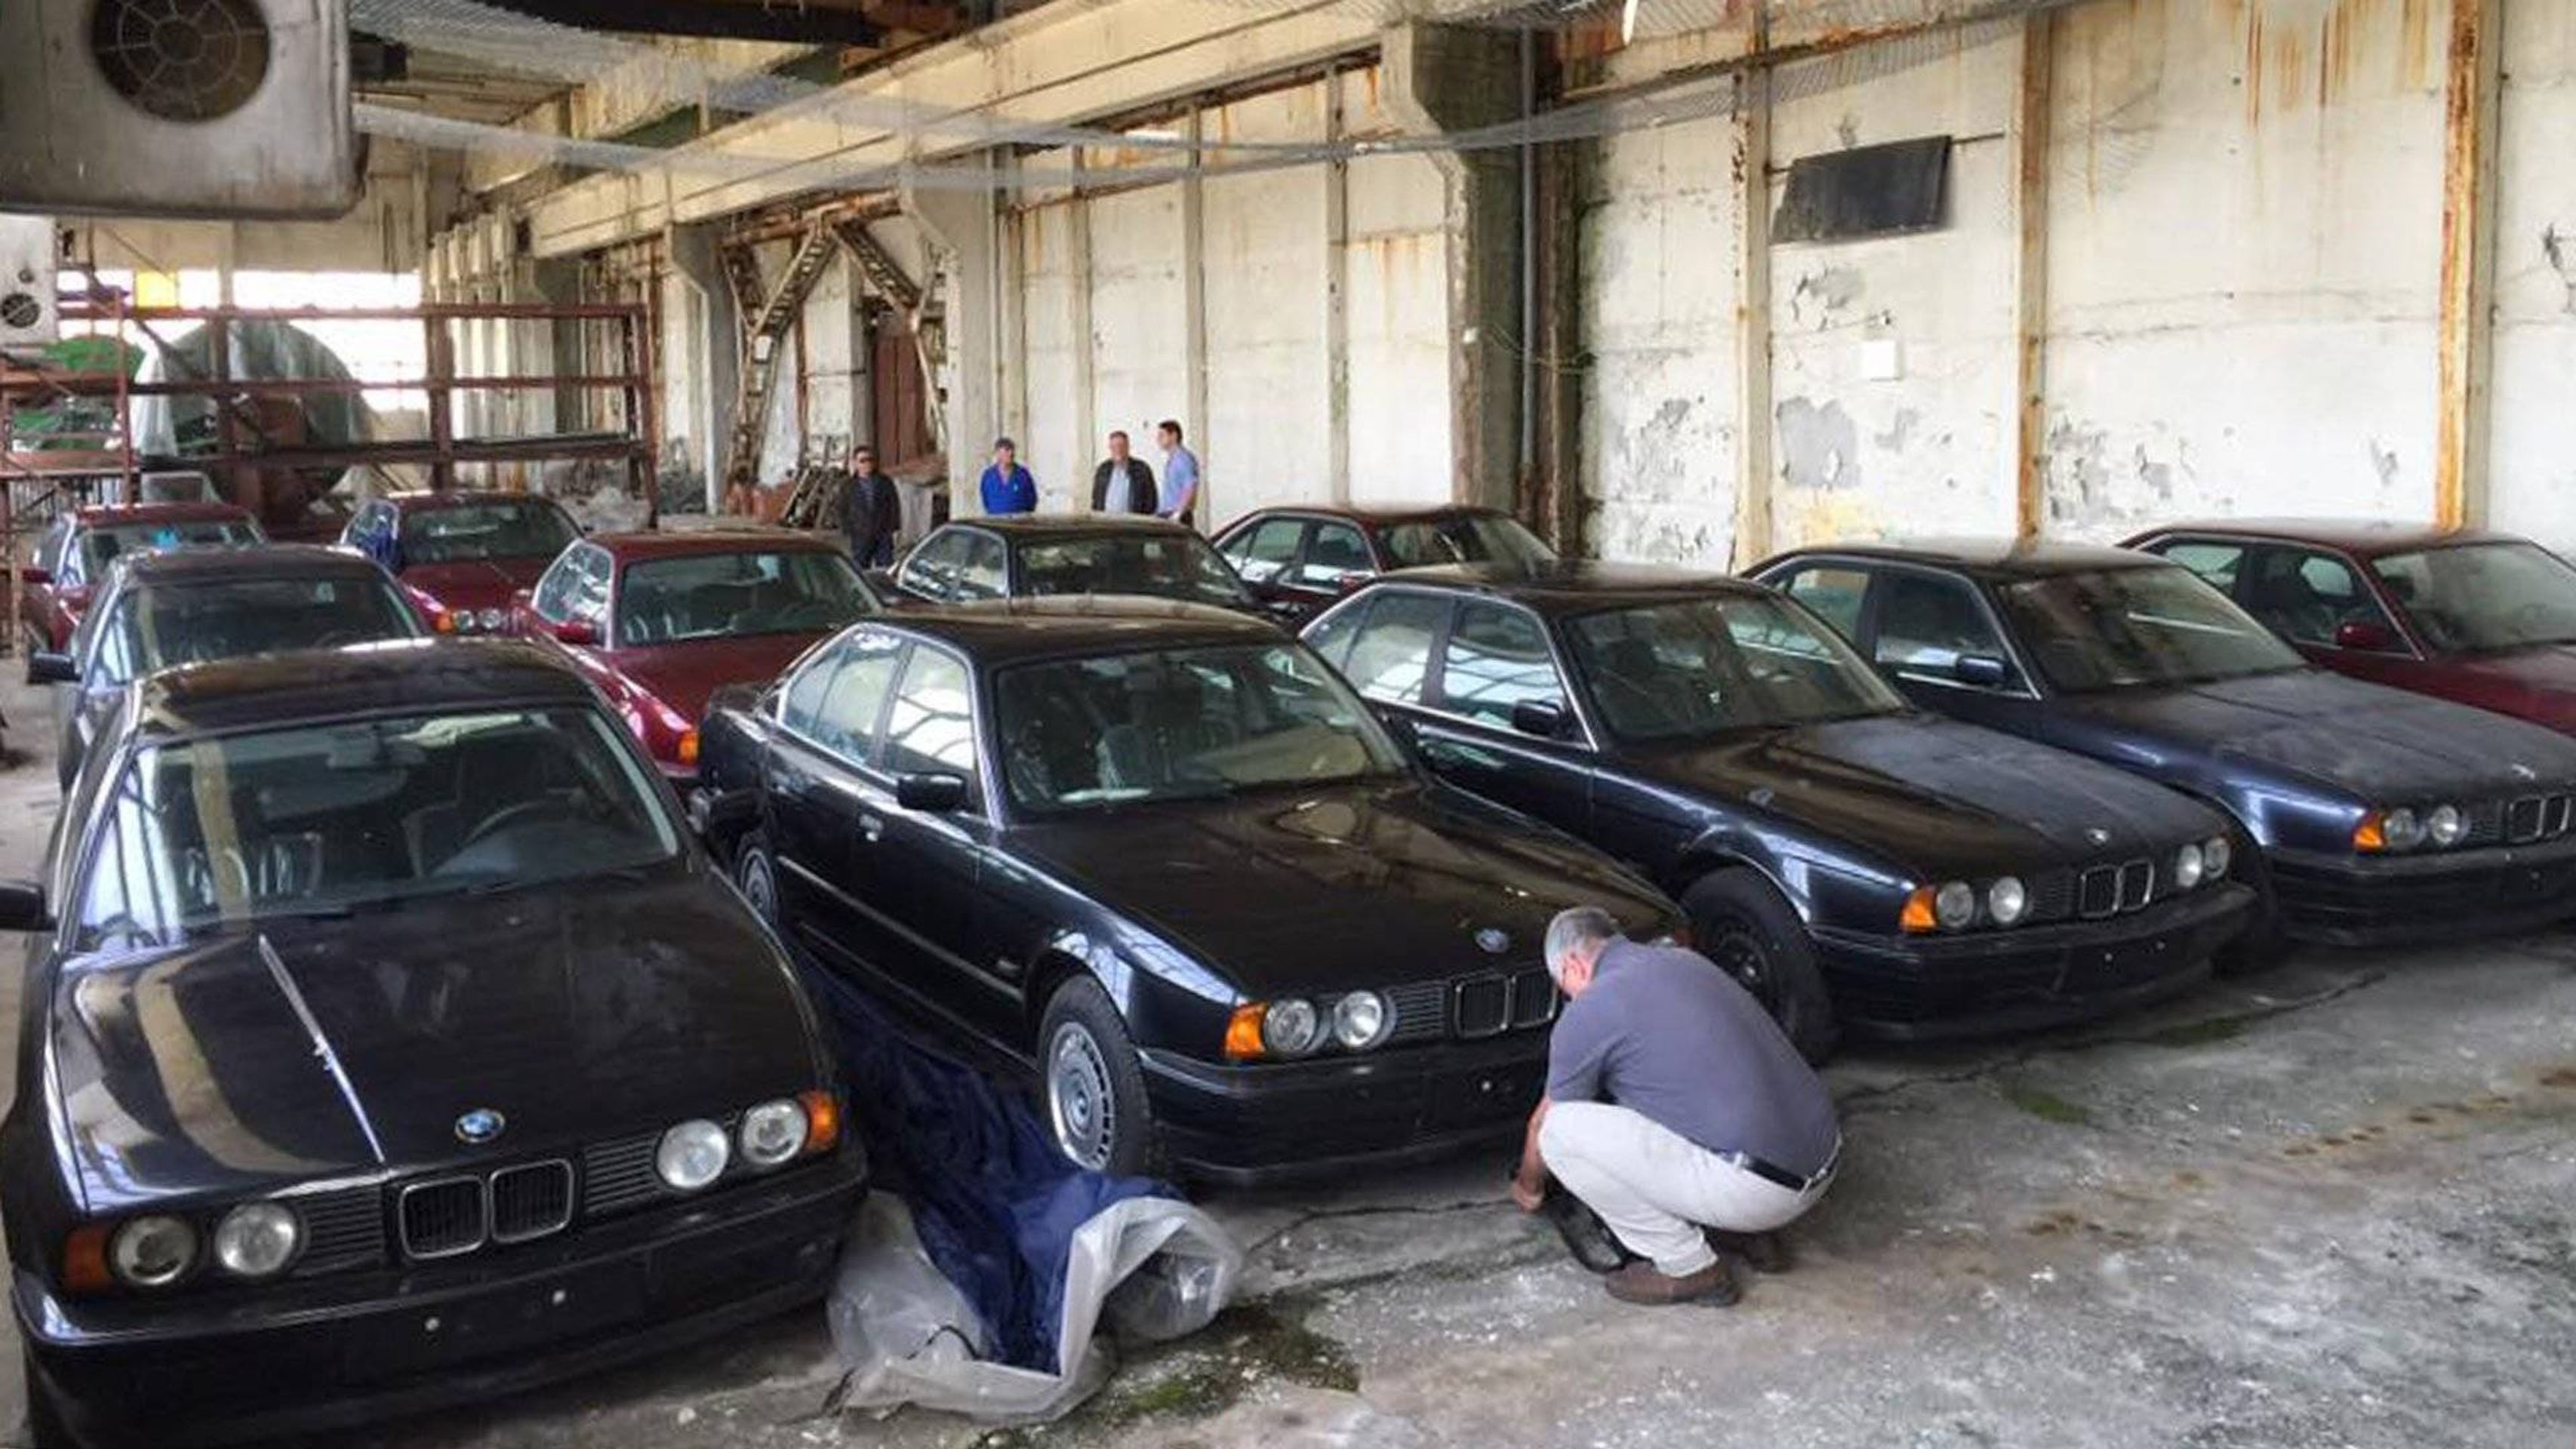 Sklad 25 let ukrýval 11 vozů BMW řady 5 - 28 - Fotogalerie: V bulharském skladu se 25 let skrýval poklad (1/16)